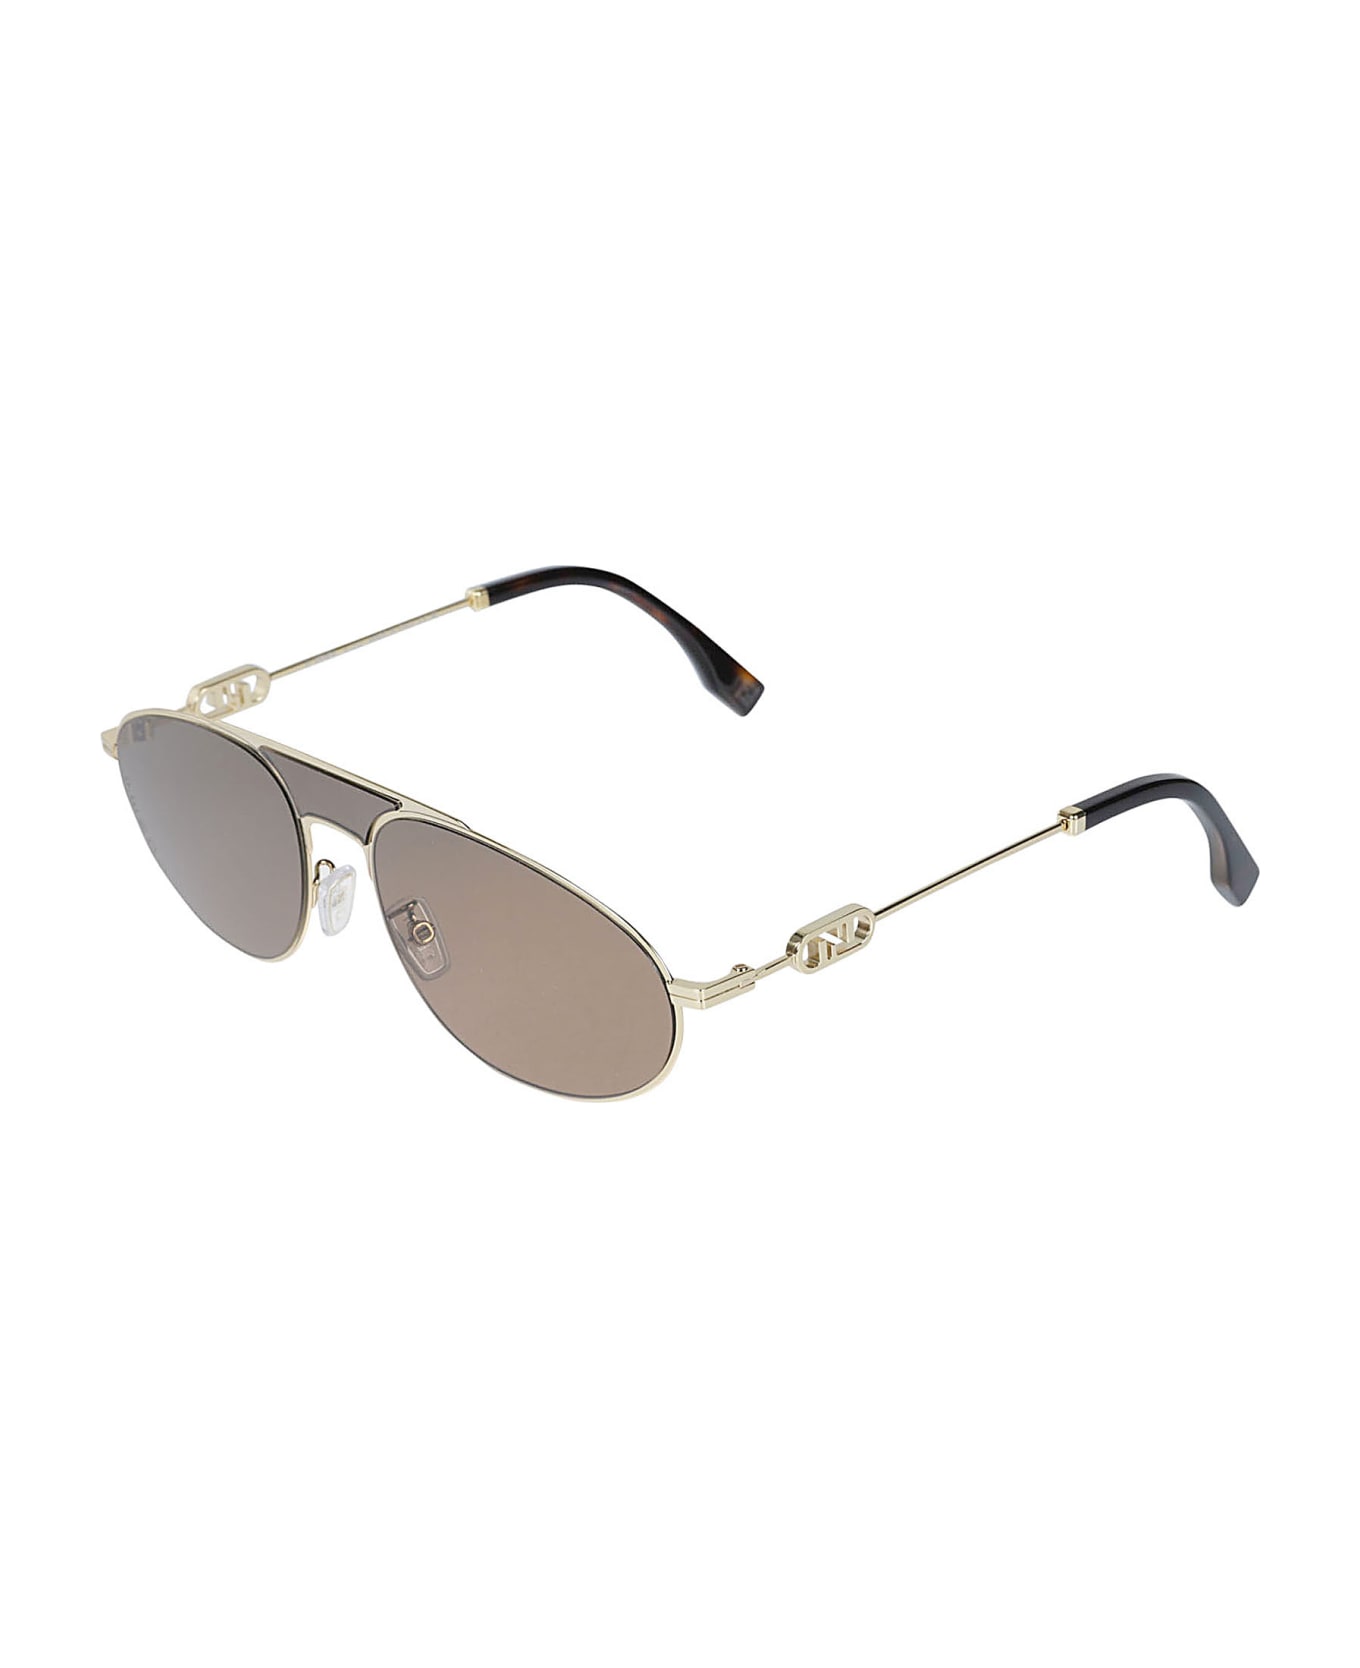 Fendi Eyewear Oval Aviator Sunglasses - 30e